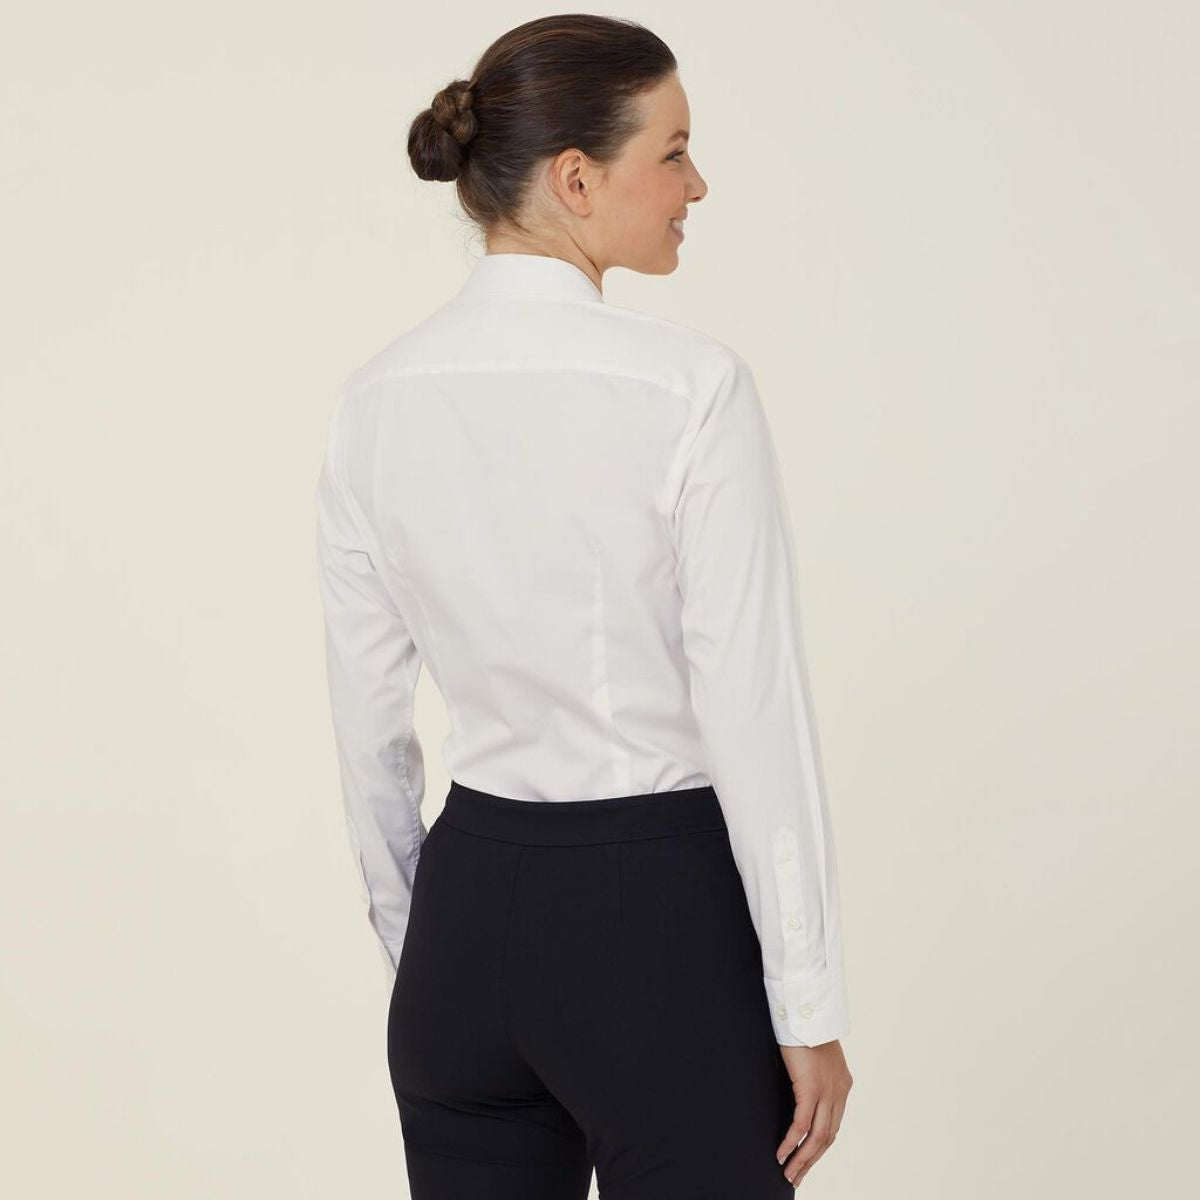 NNT Women's Avignon Stretch Long Sleeve Shirt CATUKW